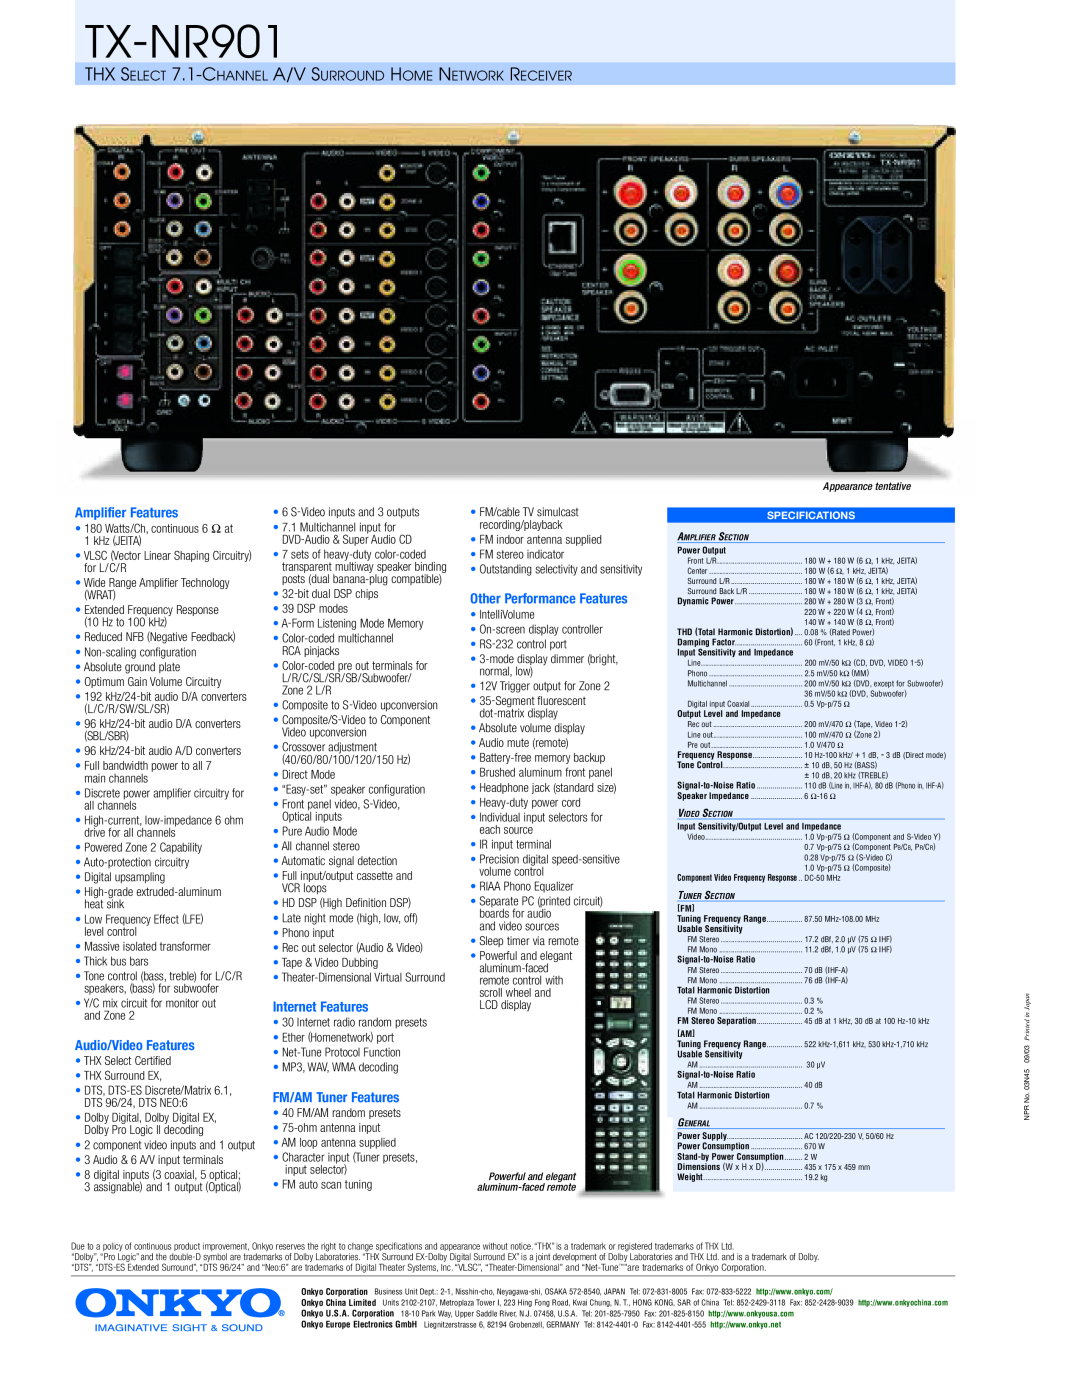 Onkyo TX-NR901 manual Amplifier Features, Audio/Video Features, Internet Features, FM/AM Tuner Features 